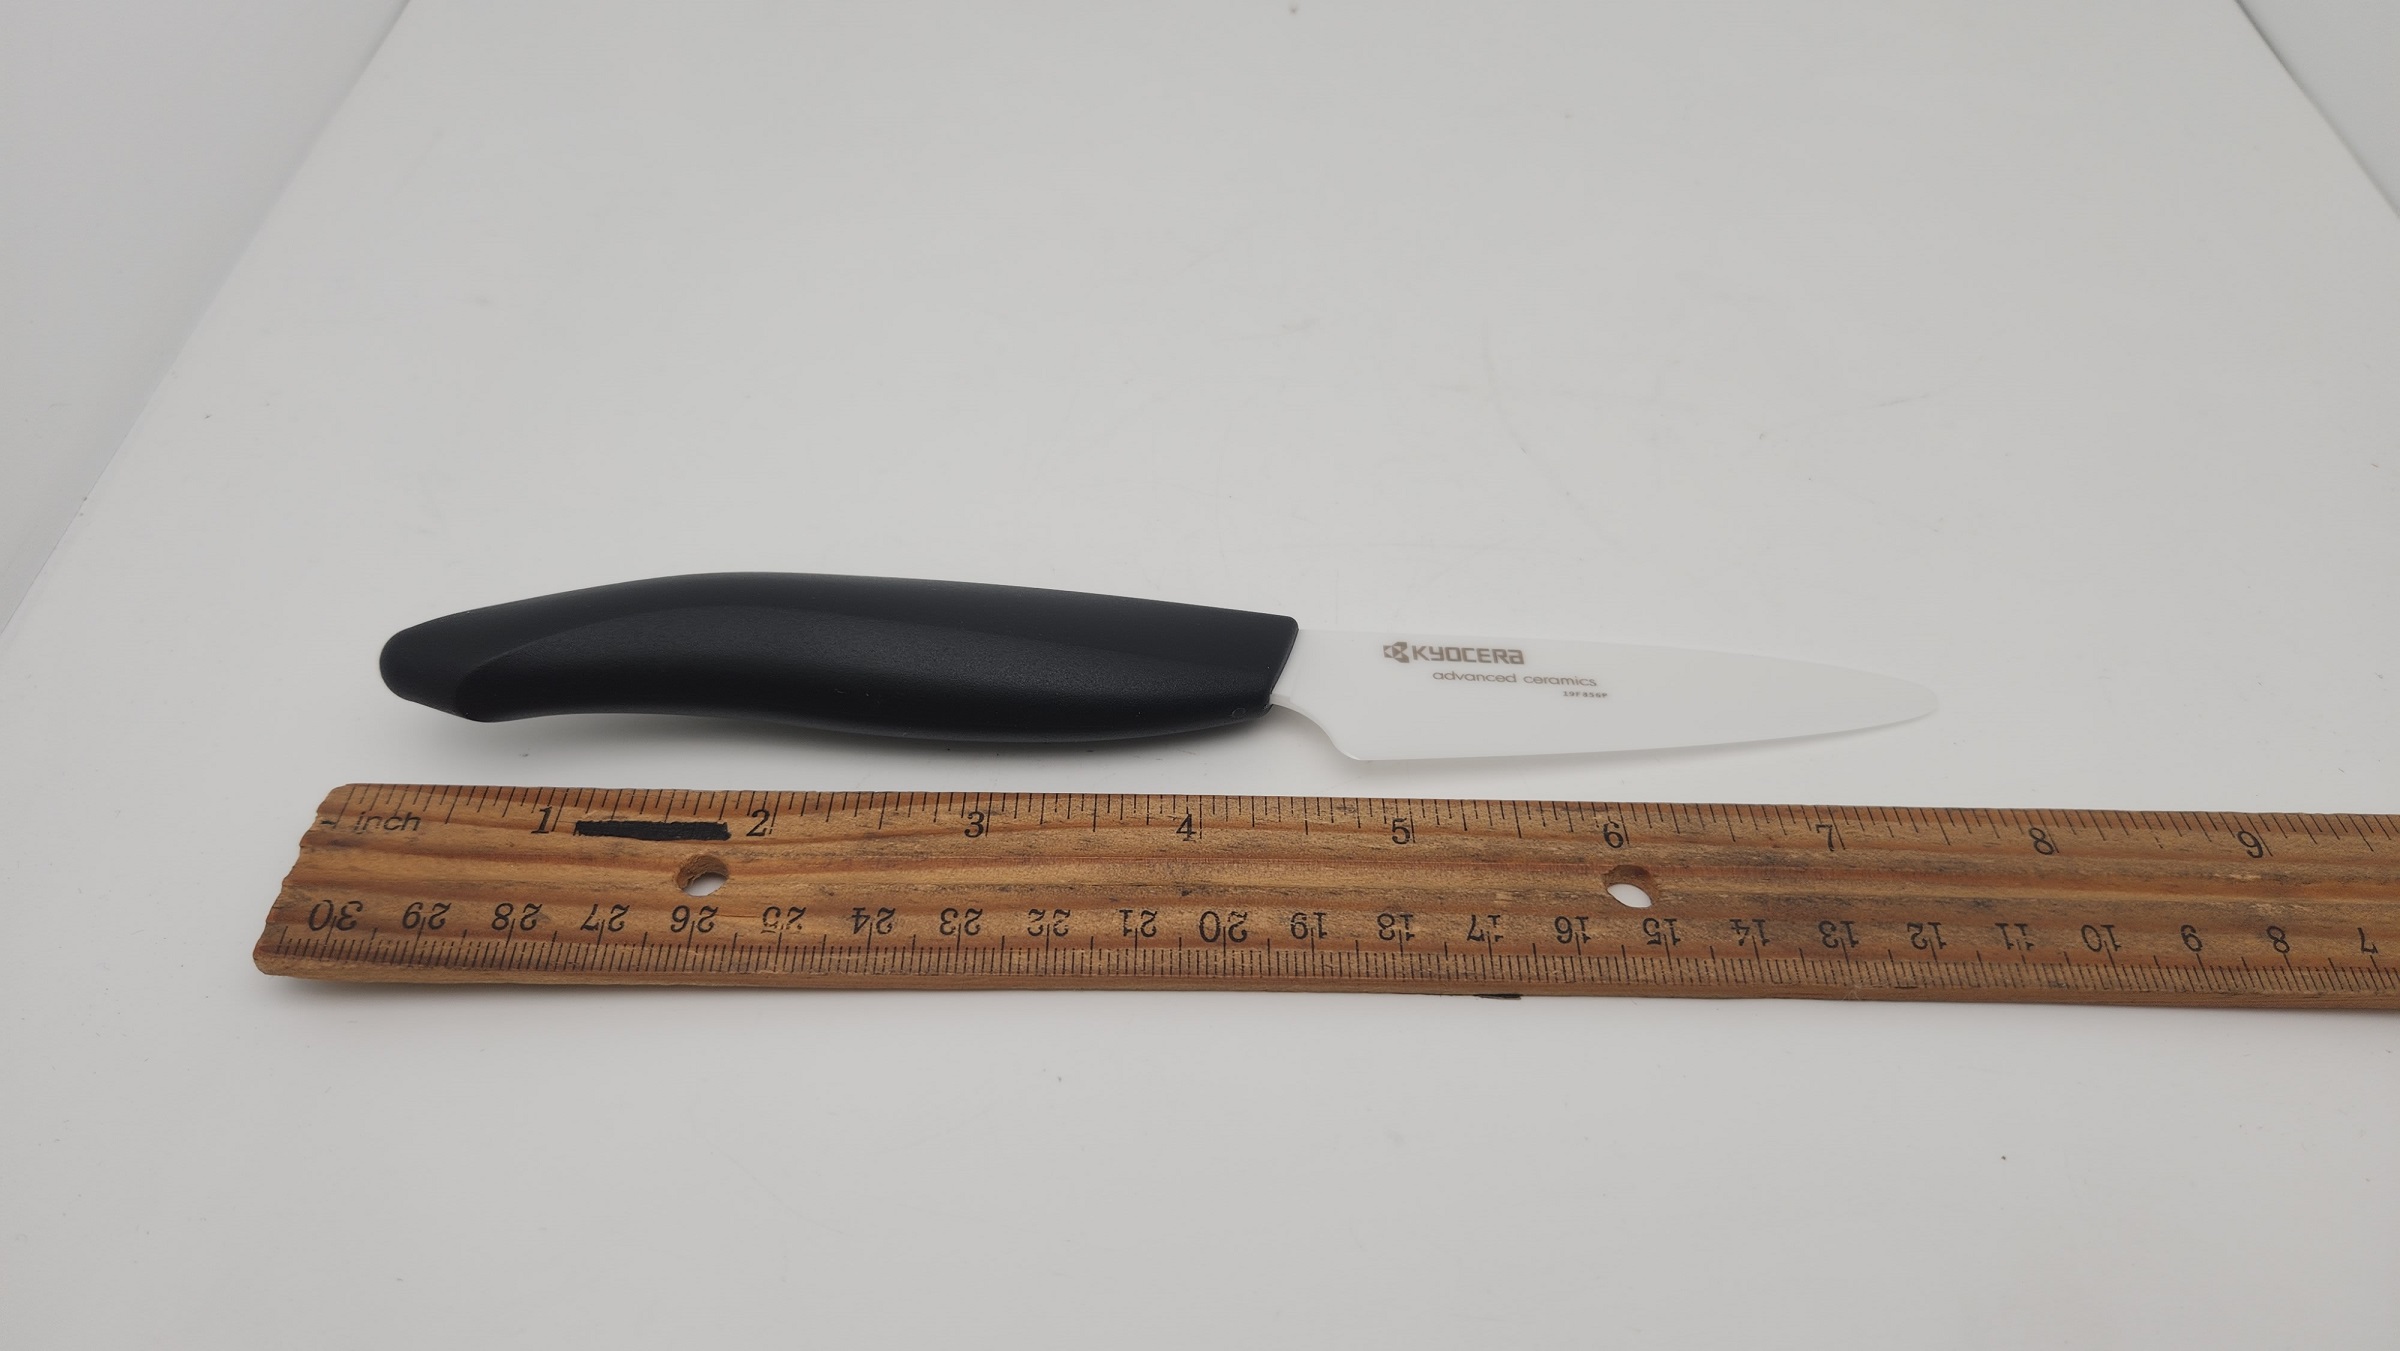 FK-075-WH-BK Ceramic Paring Knife 3 with Black Handle